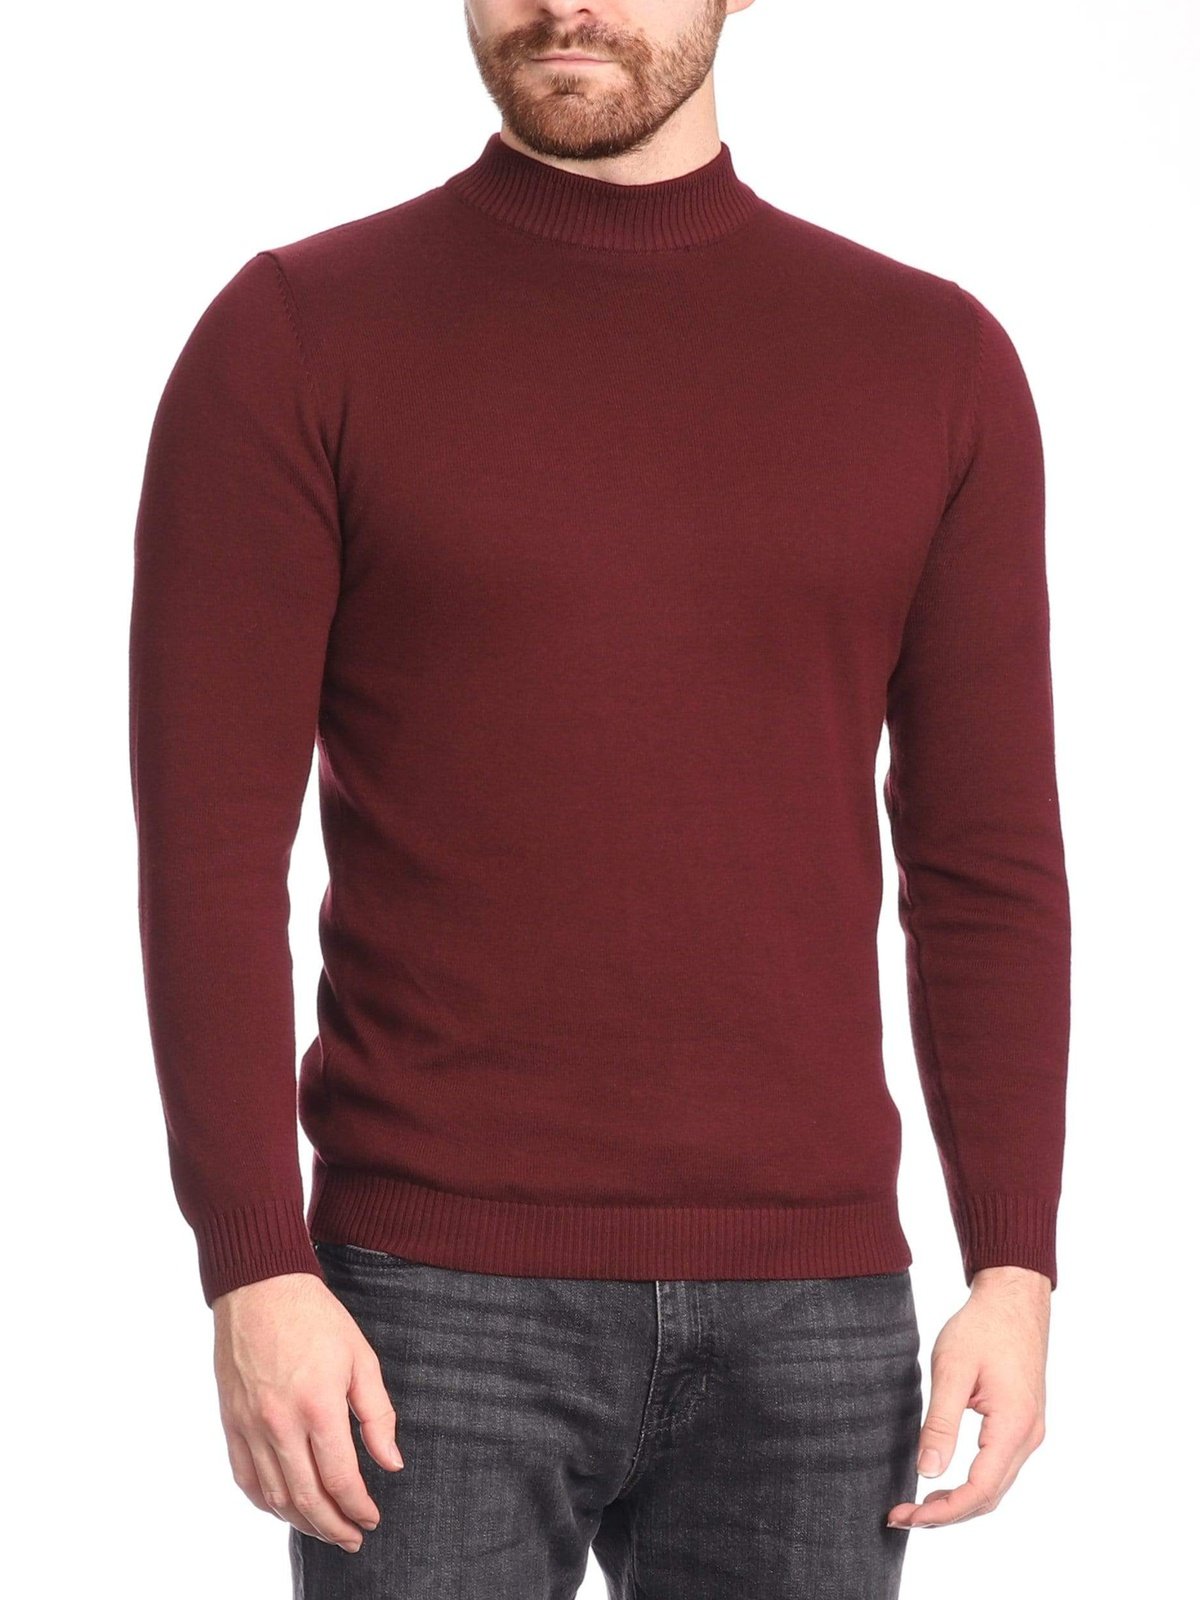 Arthur Black SWEATERS Burgundy / 6XL Arthur Black Men&#39;s Solid Burgundy Pullover Cotton Blend Mock Neck Sweater Shirt